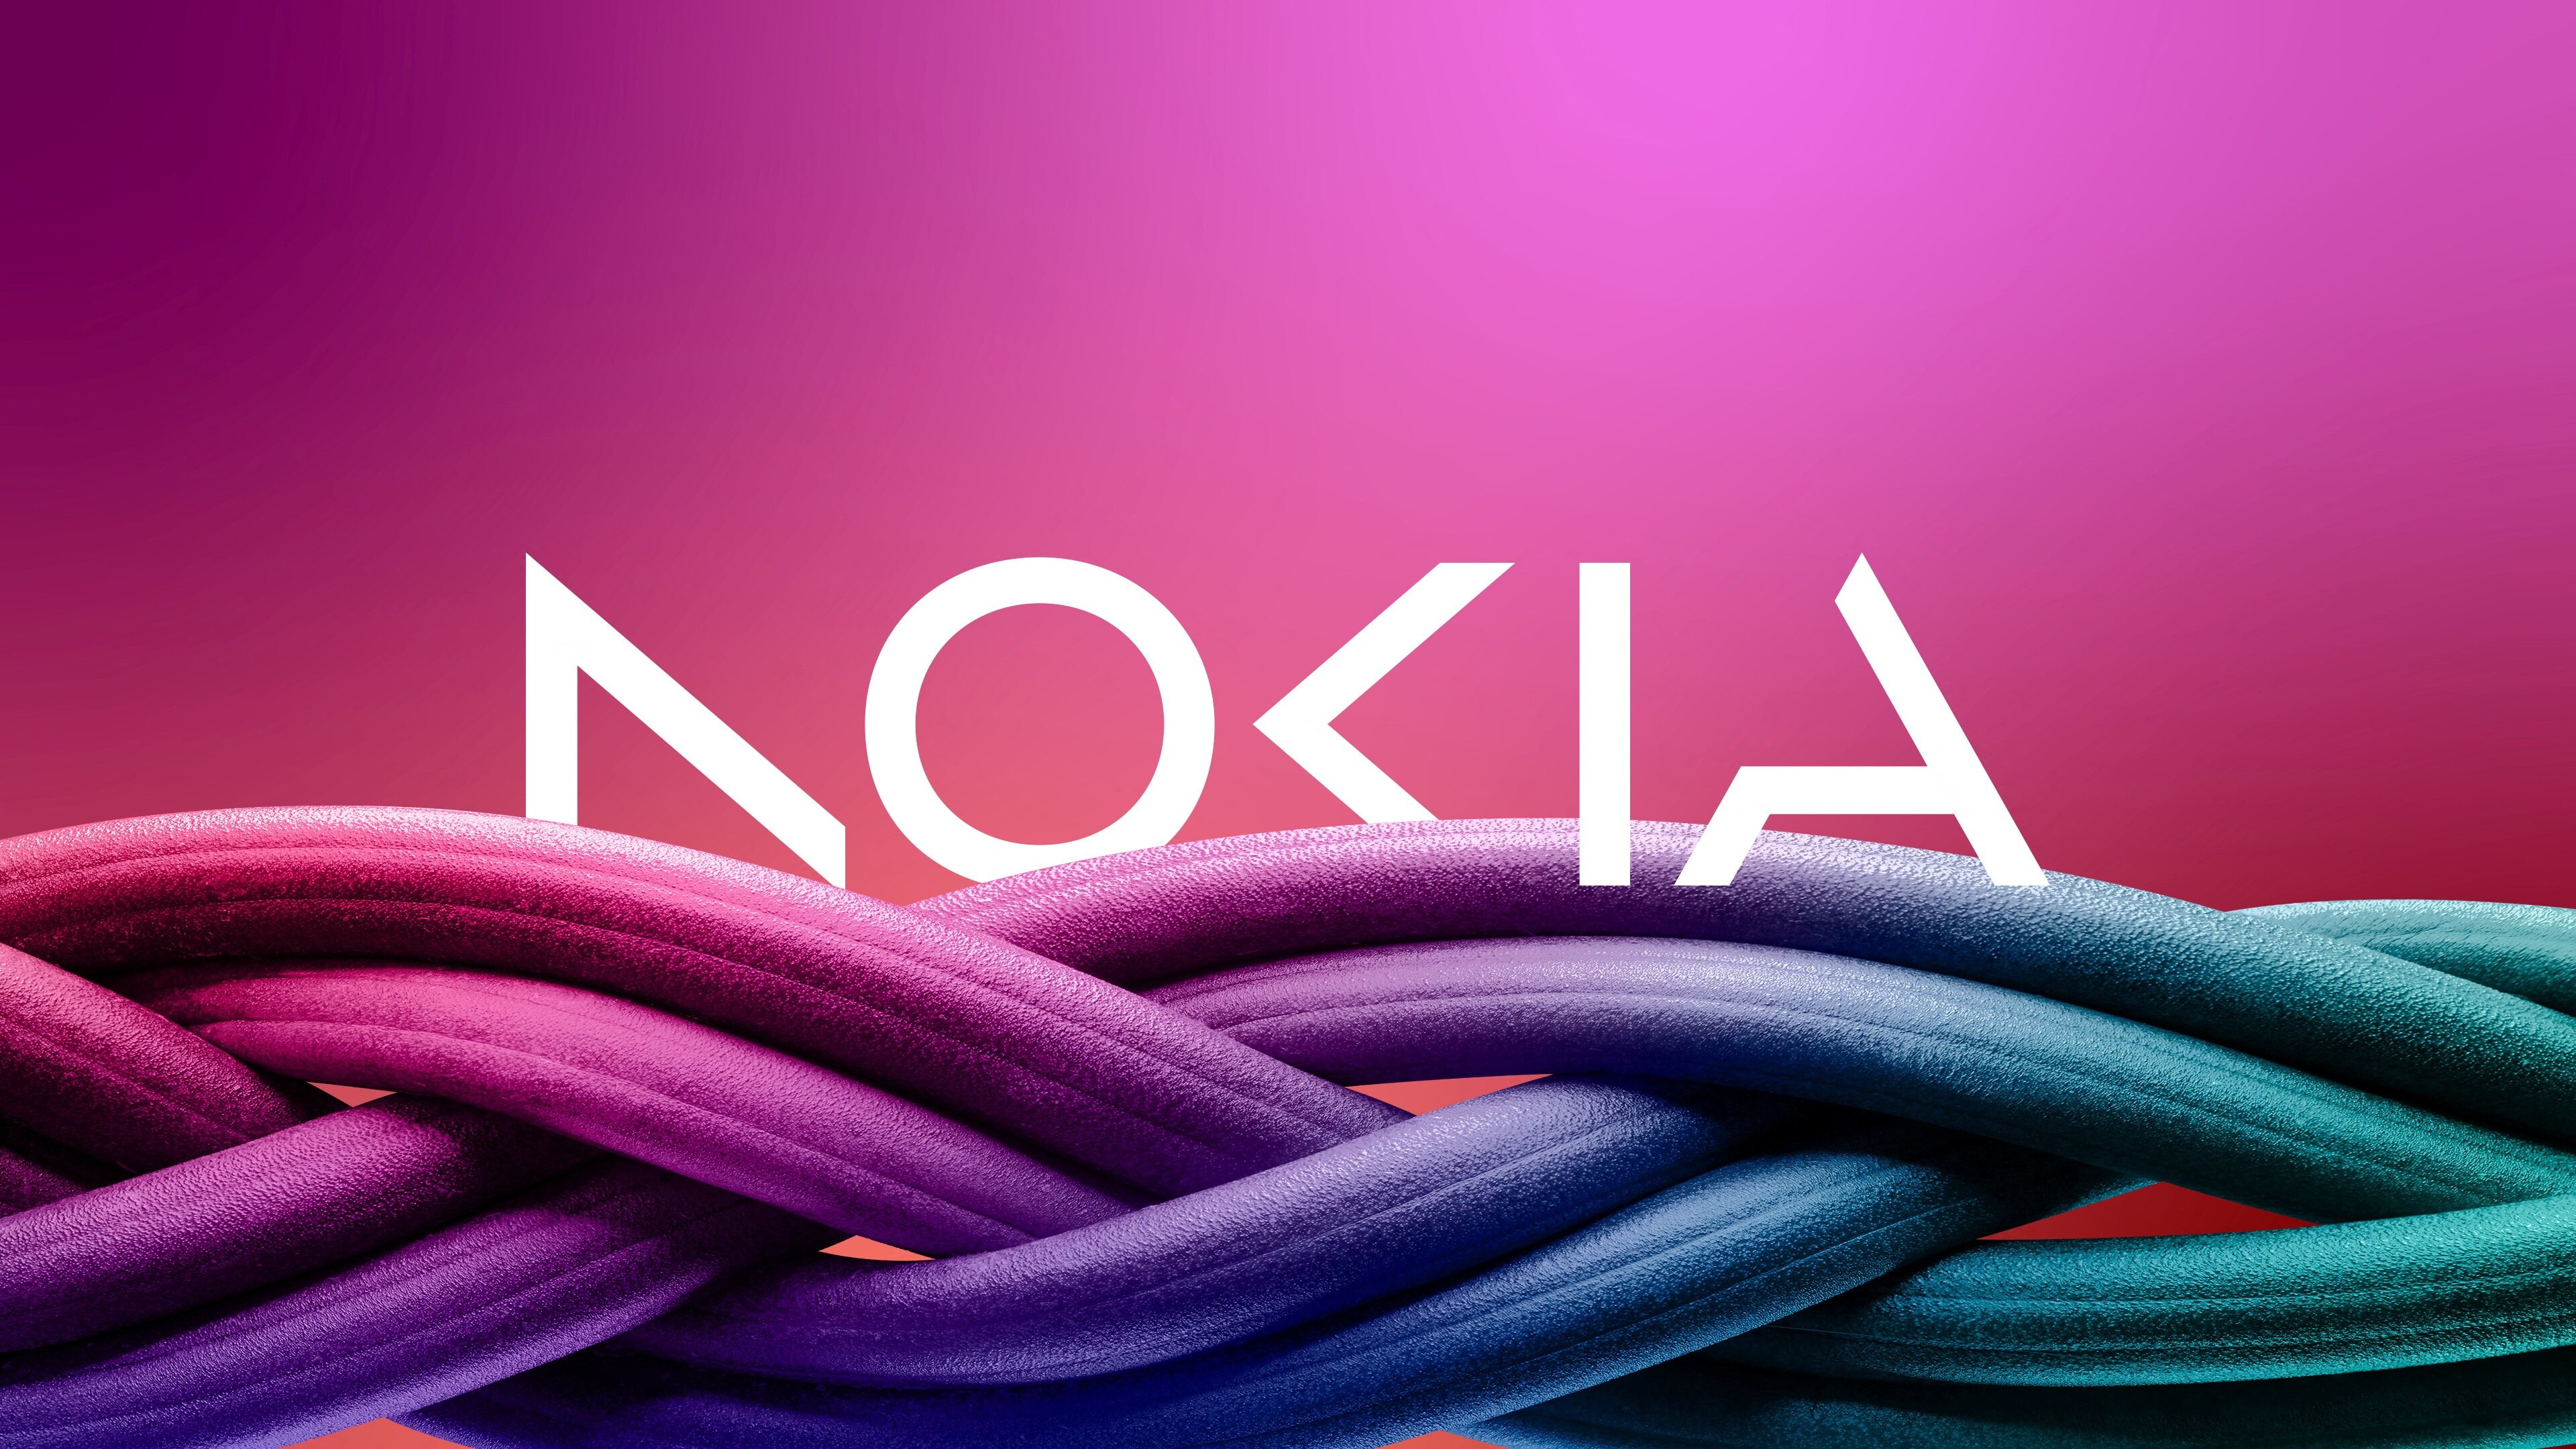 Nokia New Logo: నోకియా కొత్త లోగో చూశారా? అదిరిపోయిందిగా! 60 ఏళ్లలోనే తొలిసారిగా